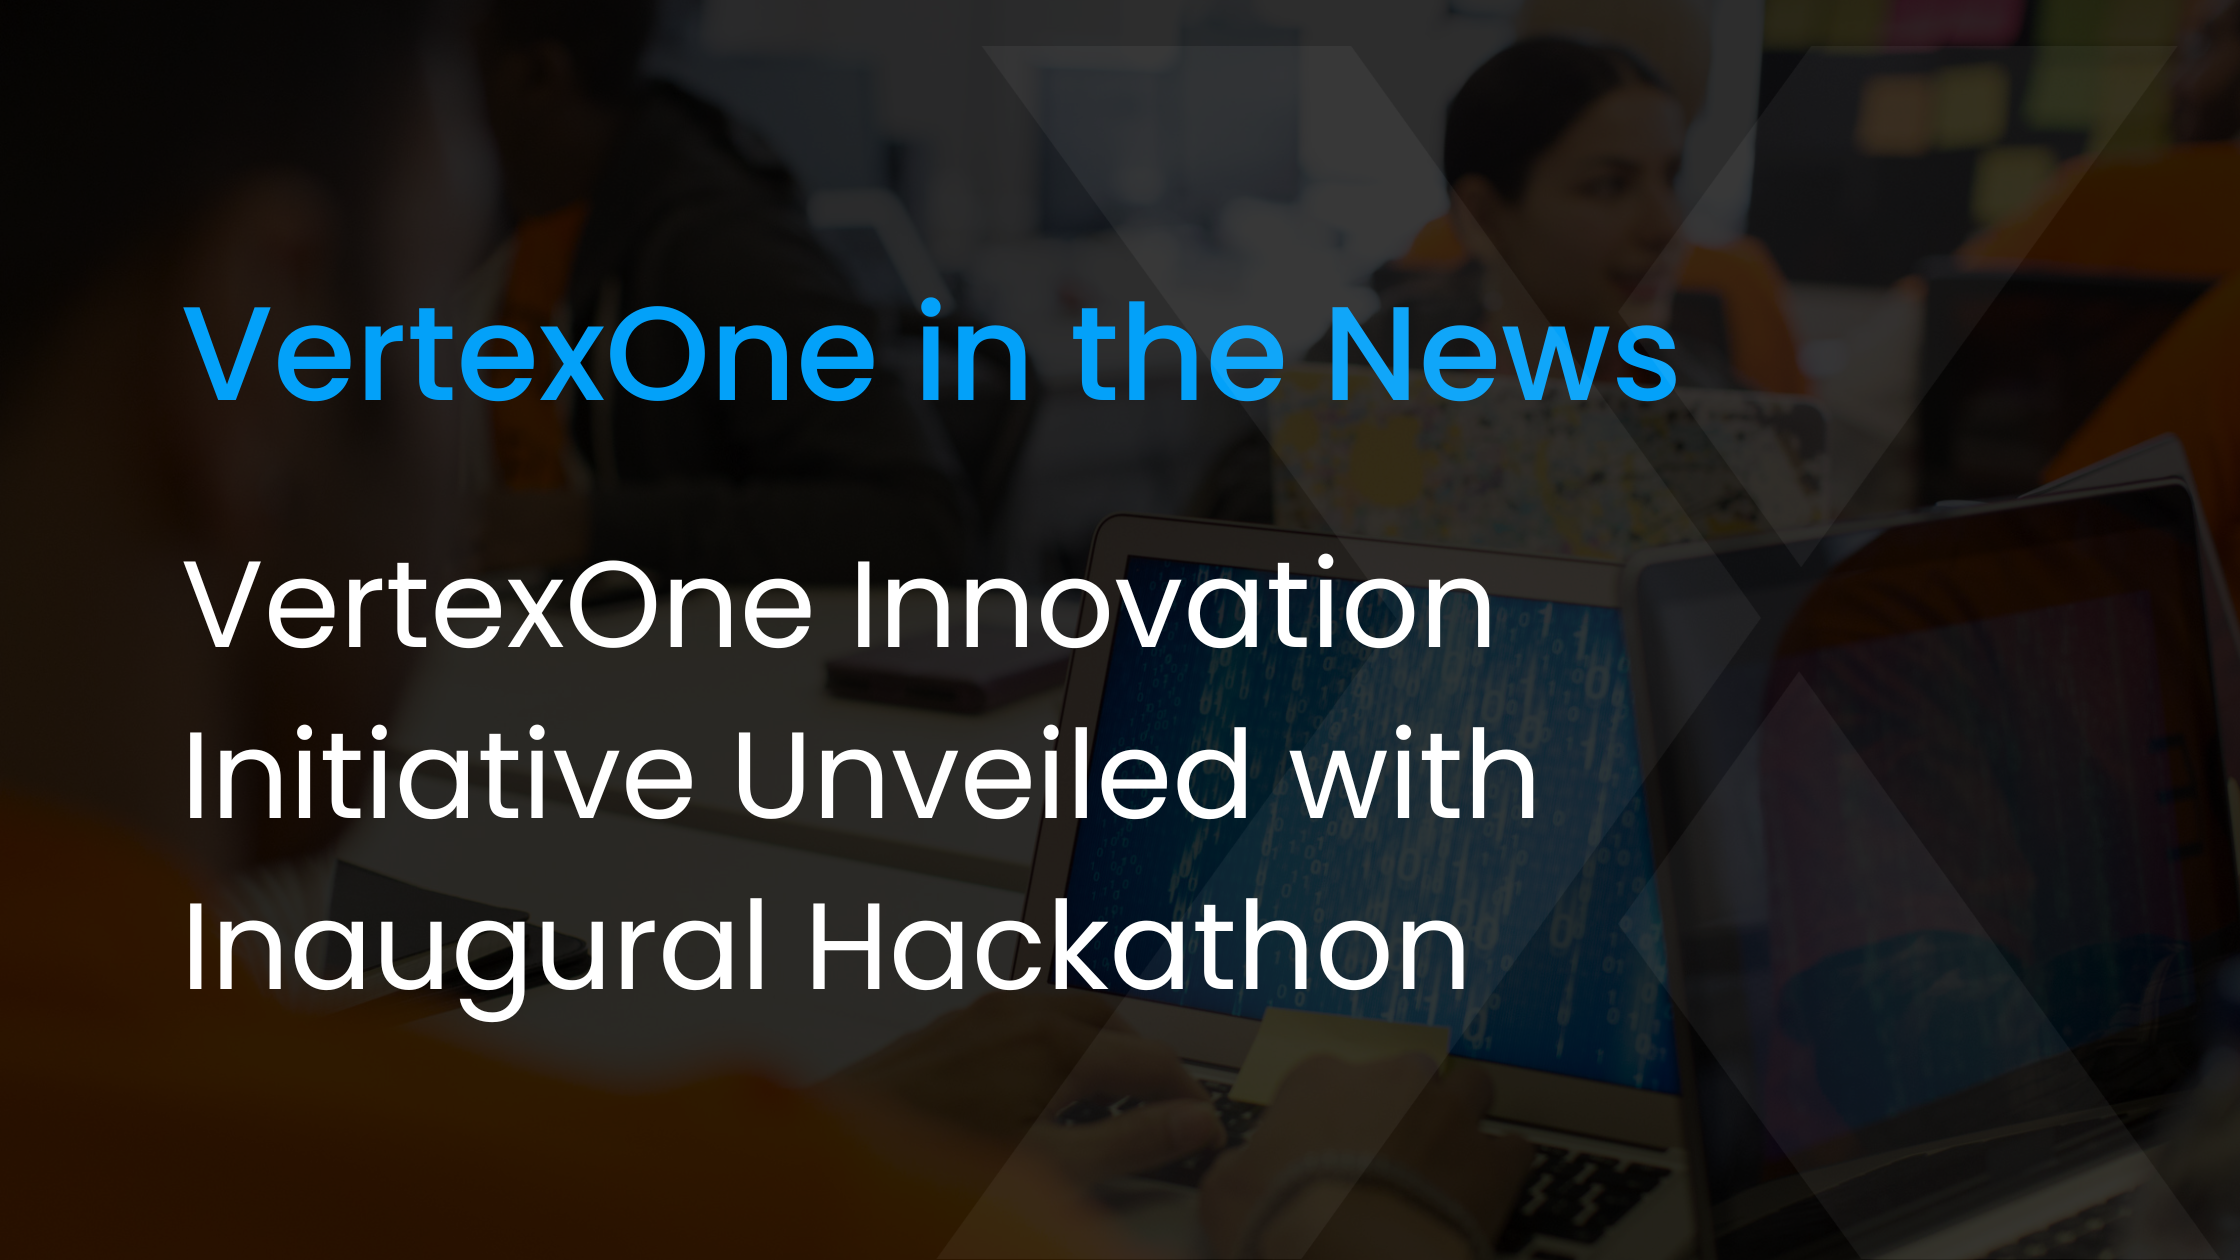 VertexOne Innovation Initiative Unveiled with Inaugural Hackathon